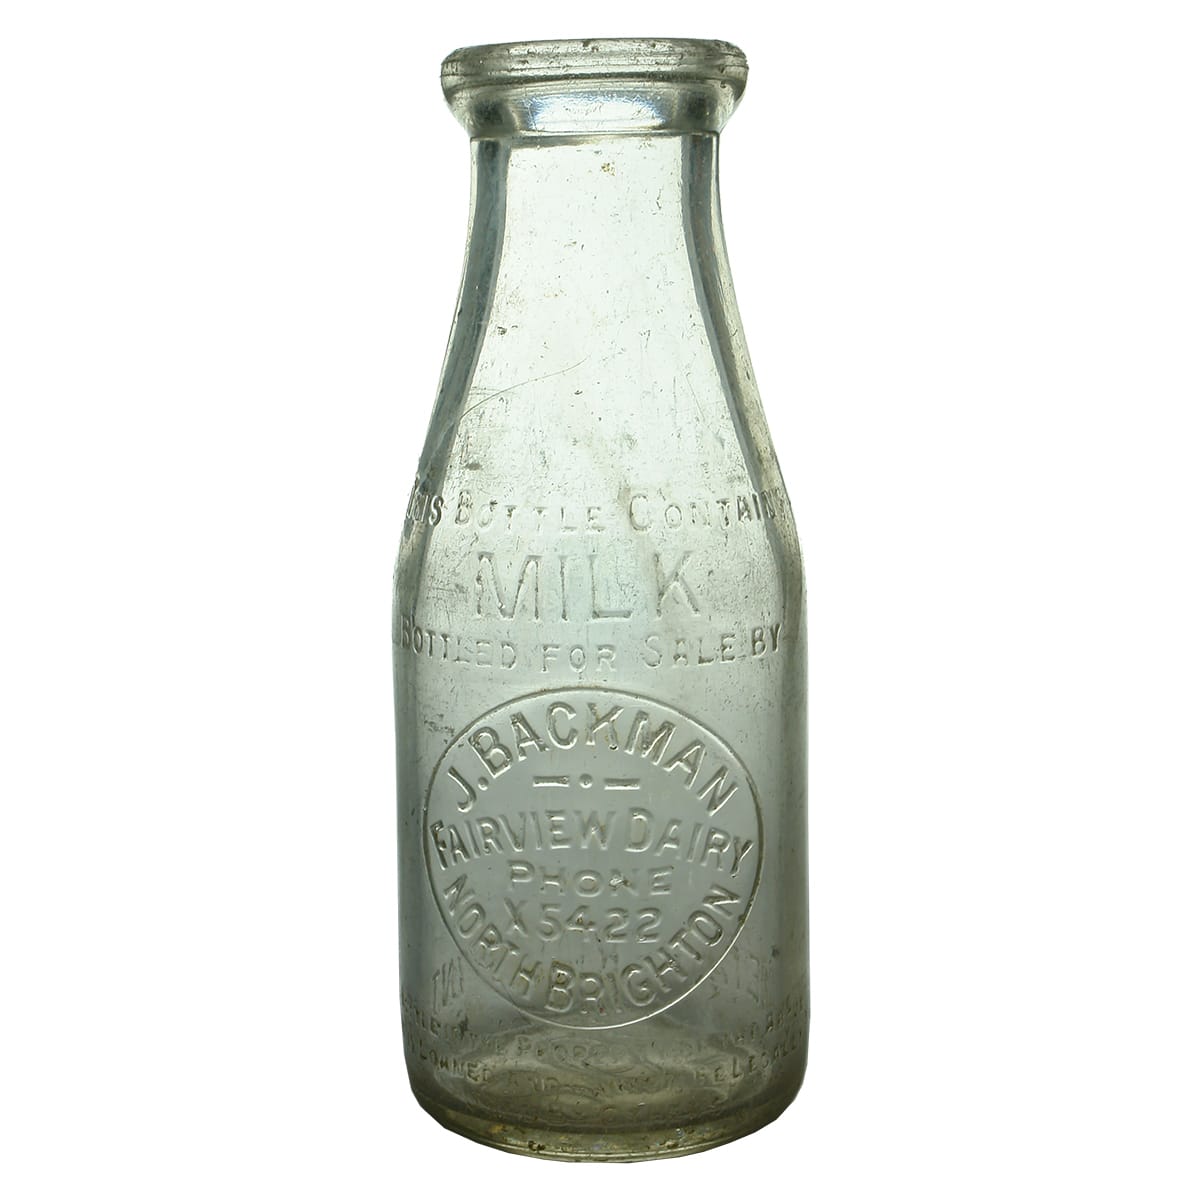 Milk. J. Backman, Fairview Dairy, North Brighton. Wad lip. 1 Pint.